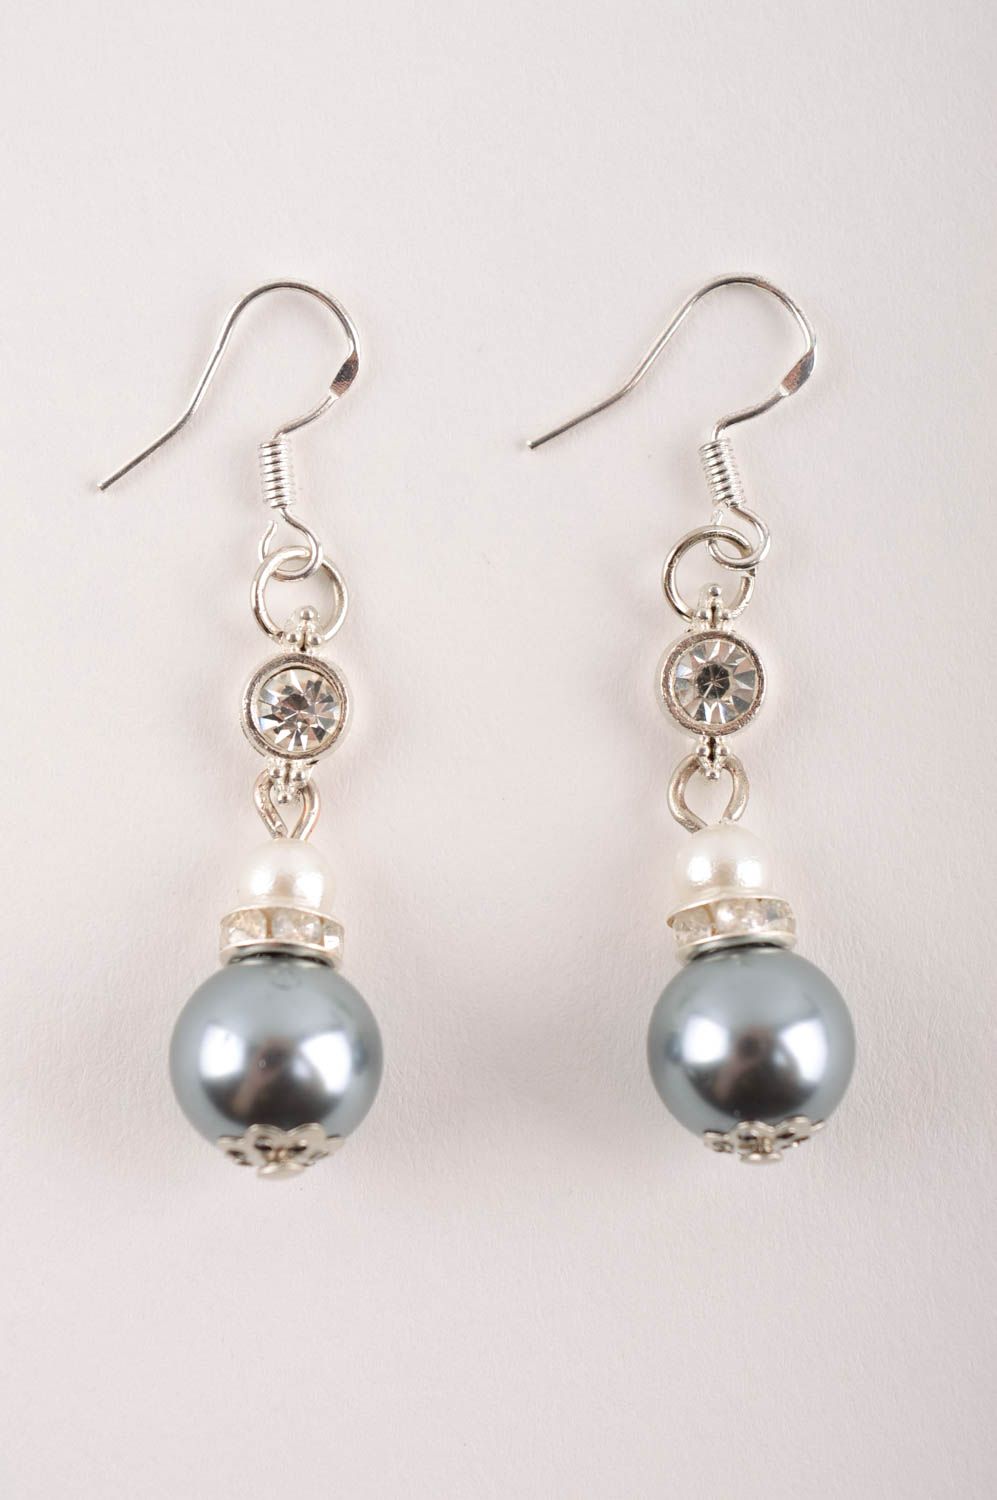 Handmade earrings with charms stylish earrings designer jewelry women accessory photo 3